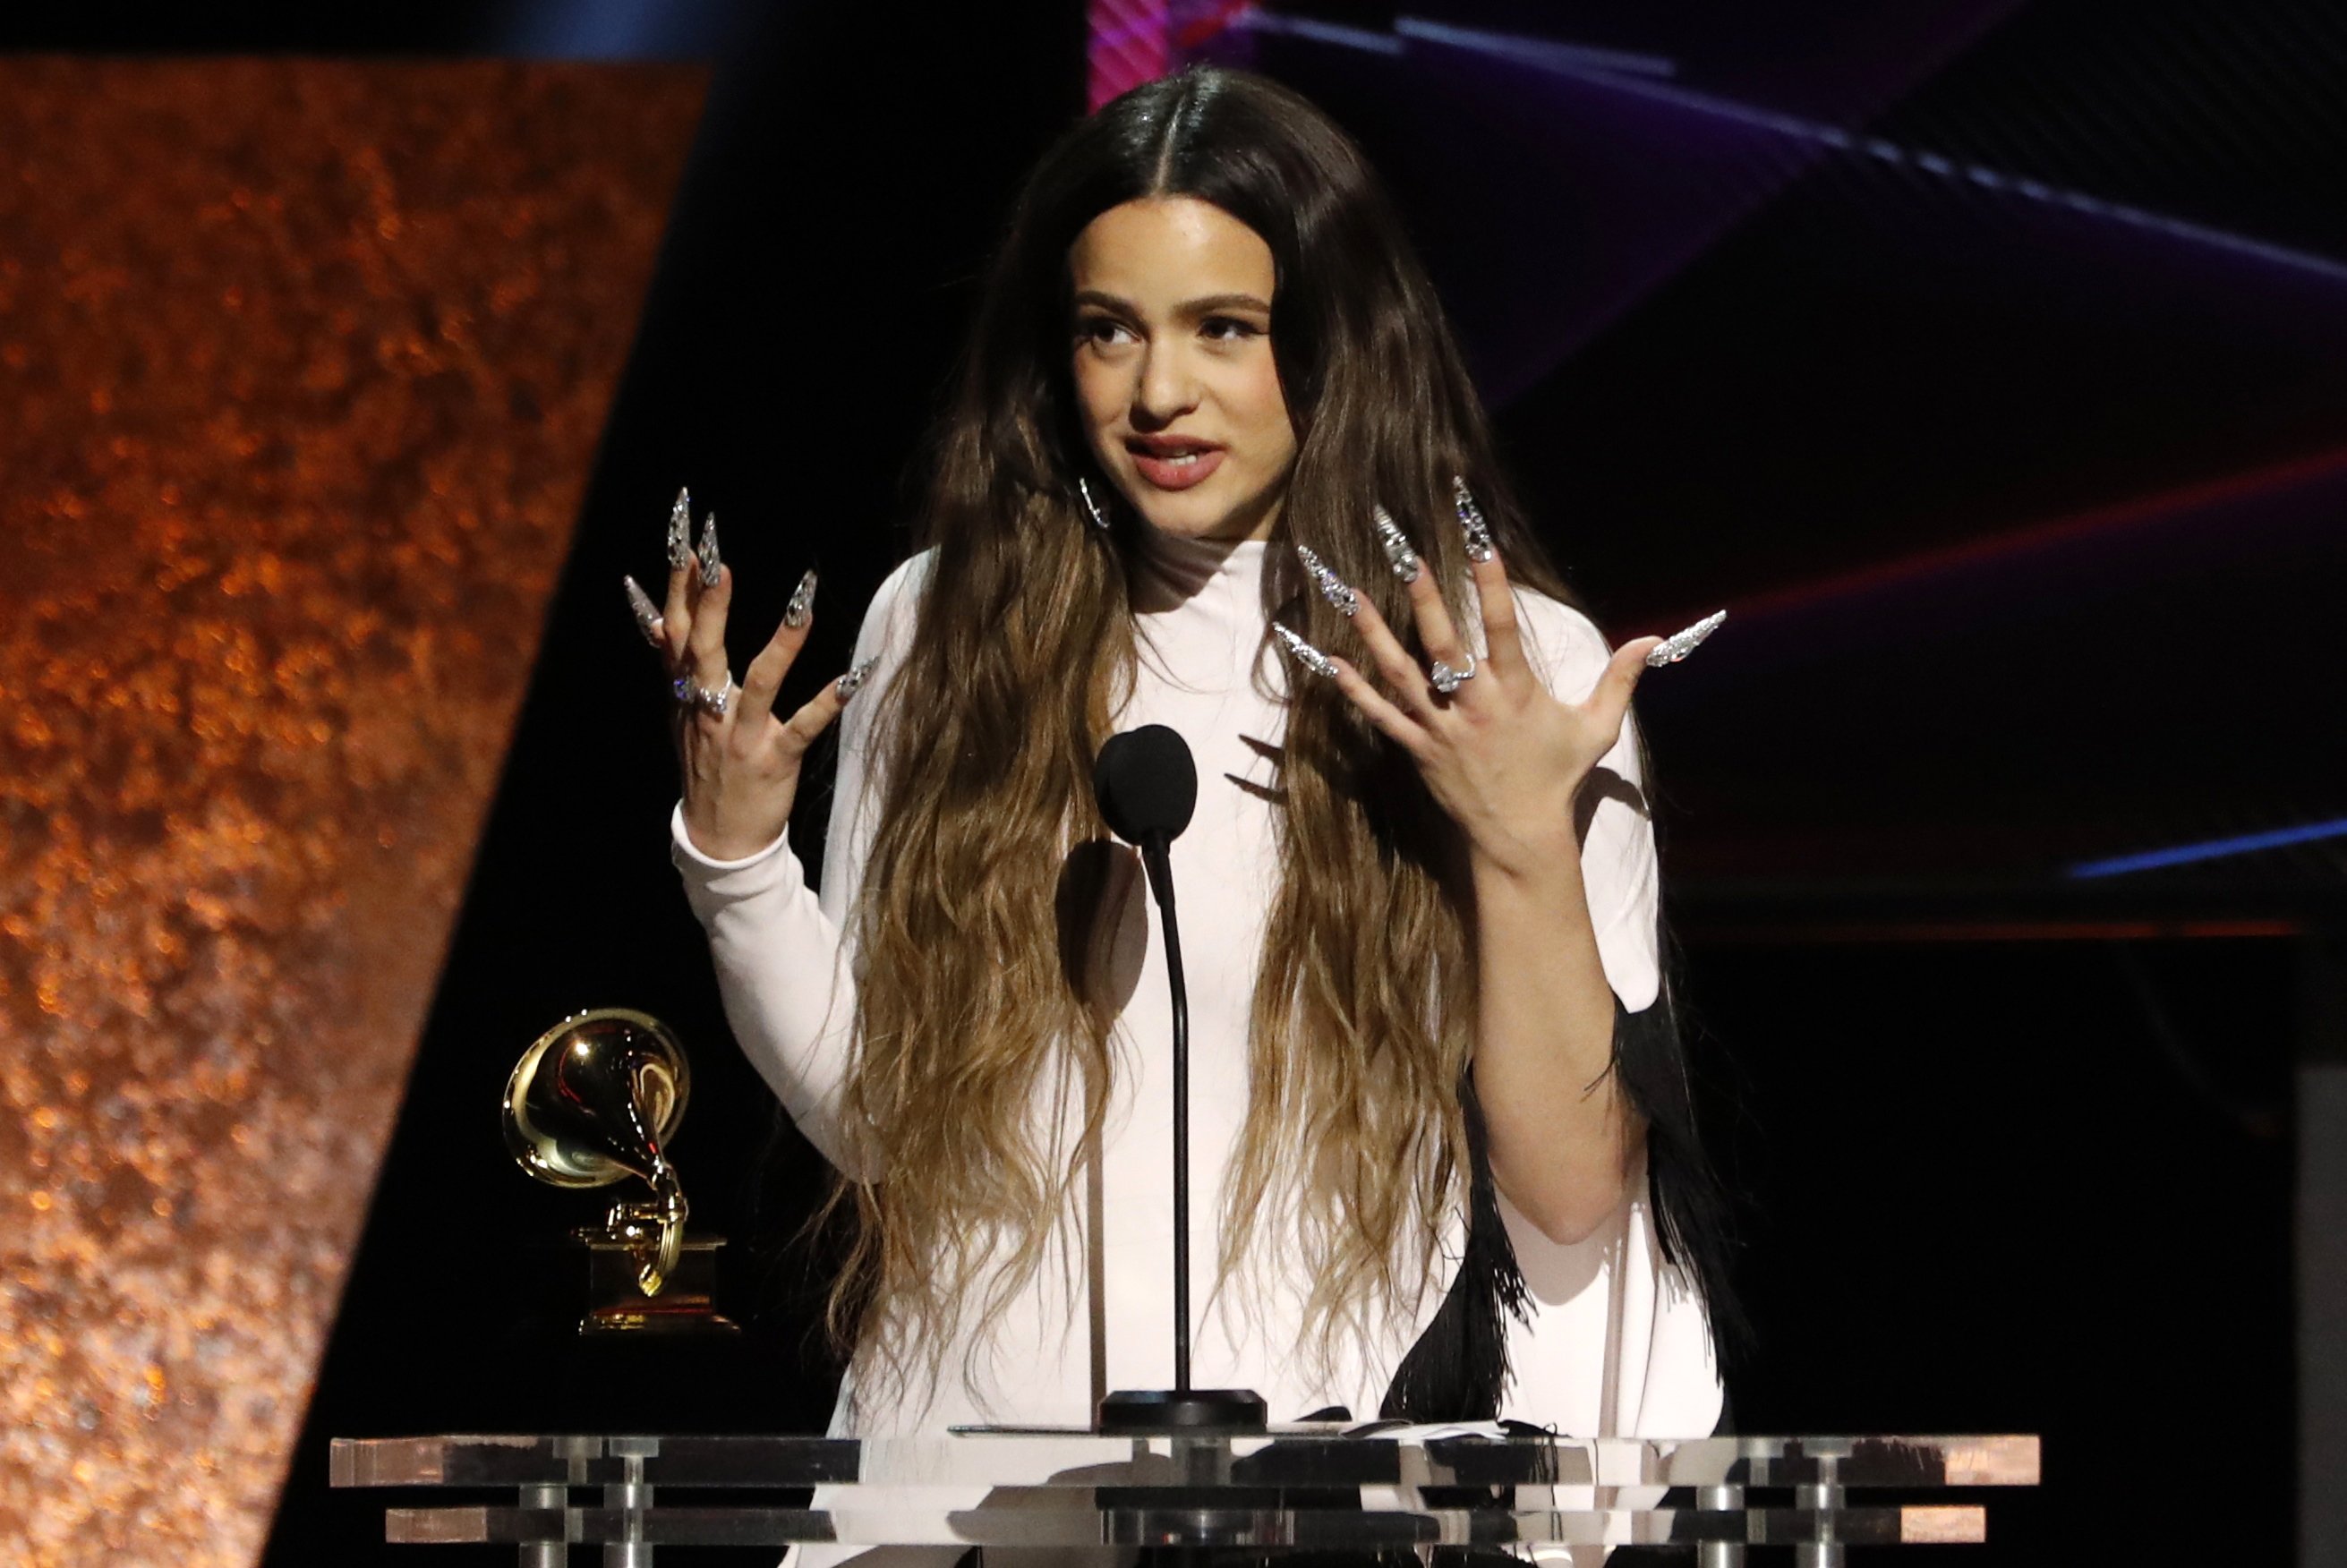 Rosalía, a star of the 2020 Grammys, gives heartfelt thanks in Catalan